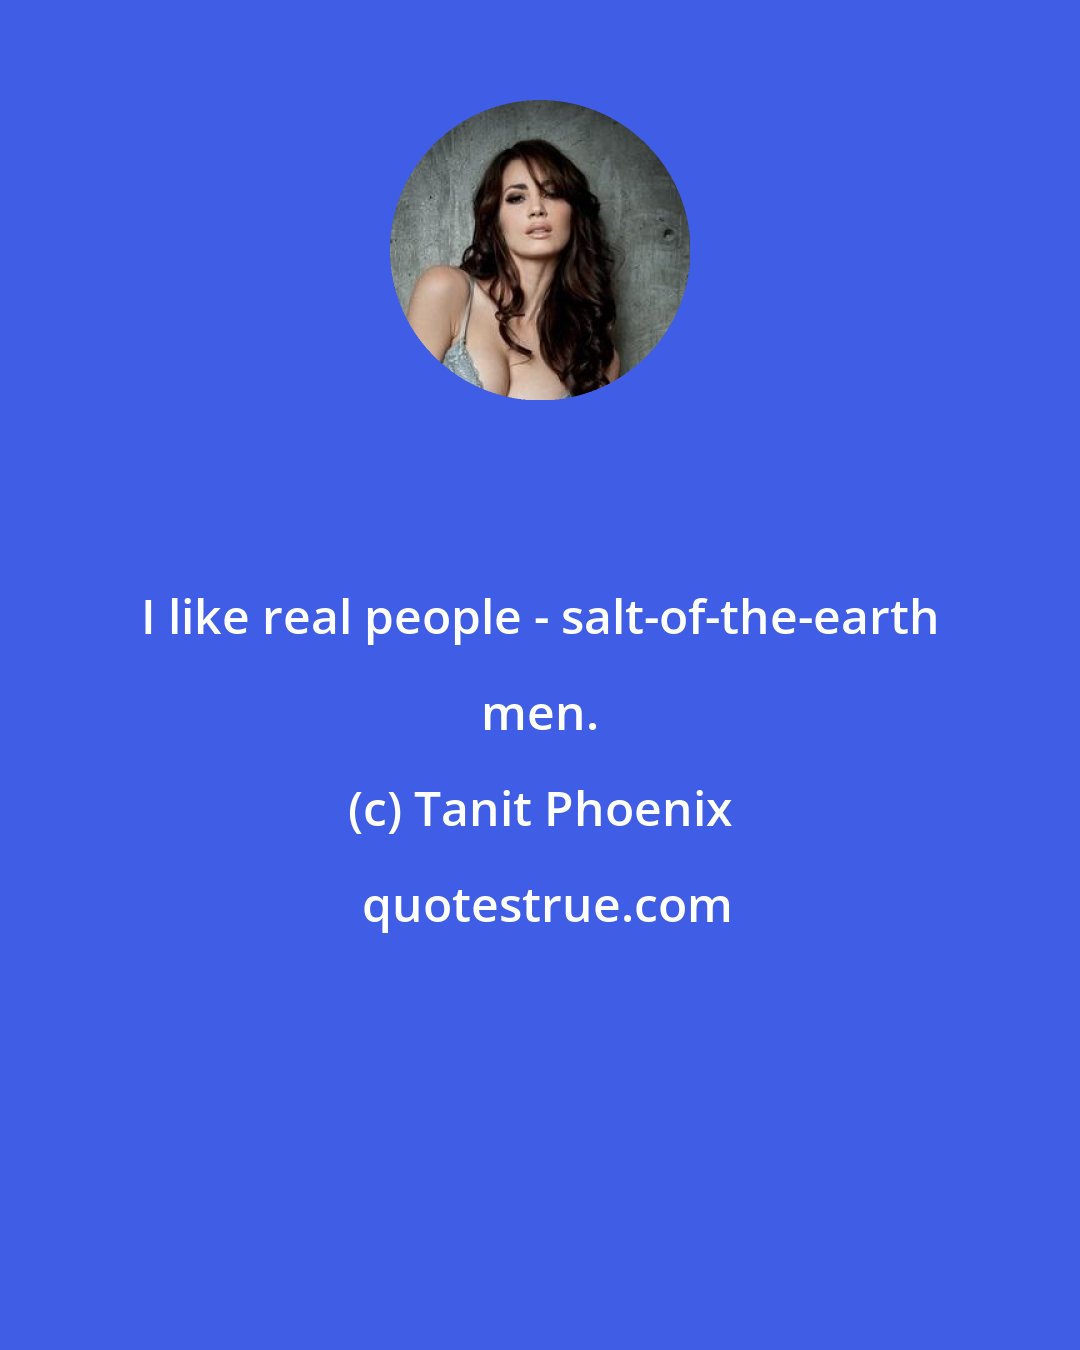 Tanit Phoenix: I like real people - salt-of-the-earth men.